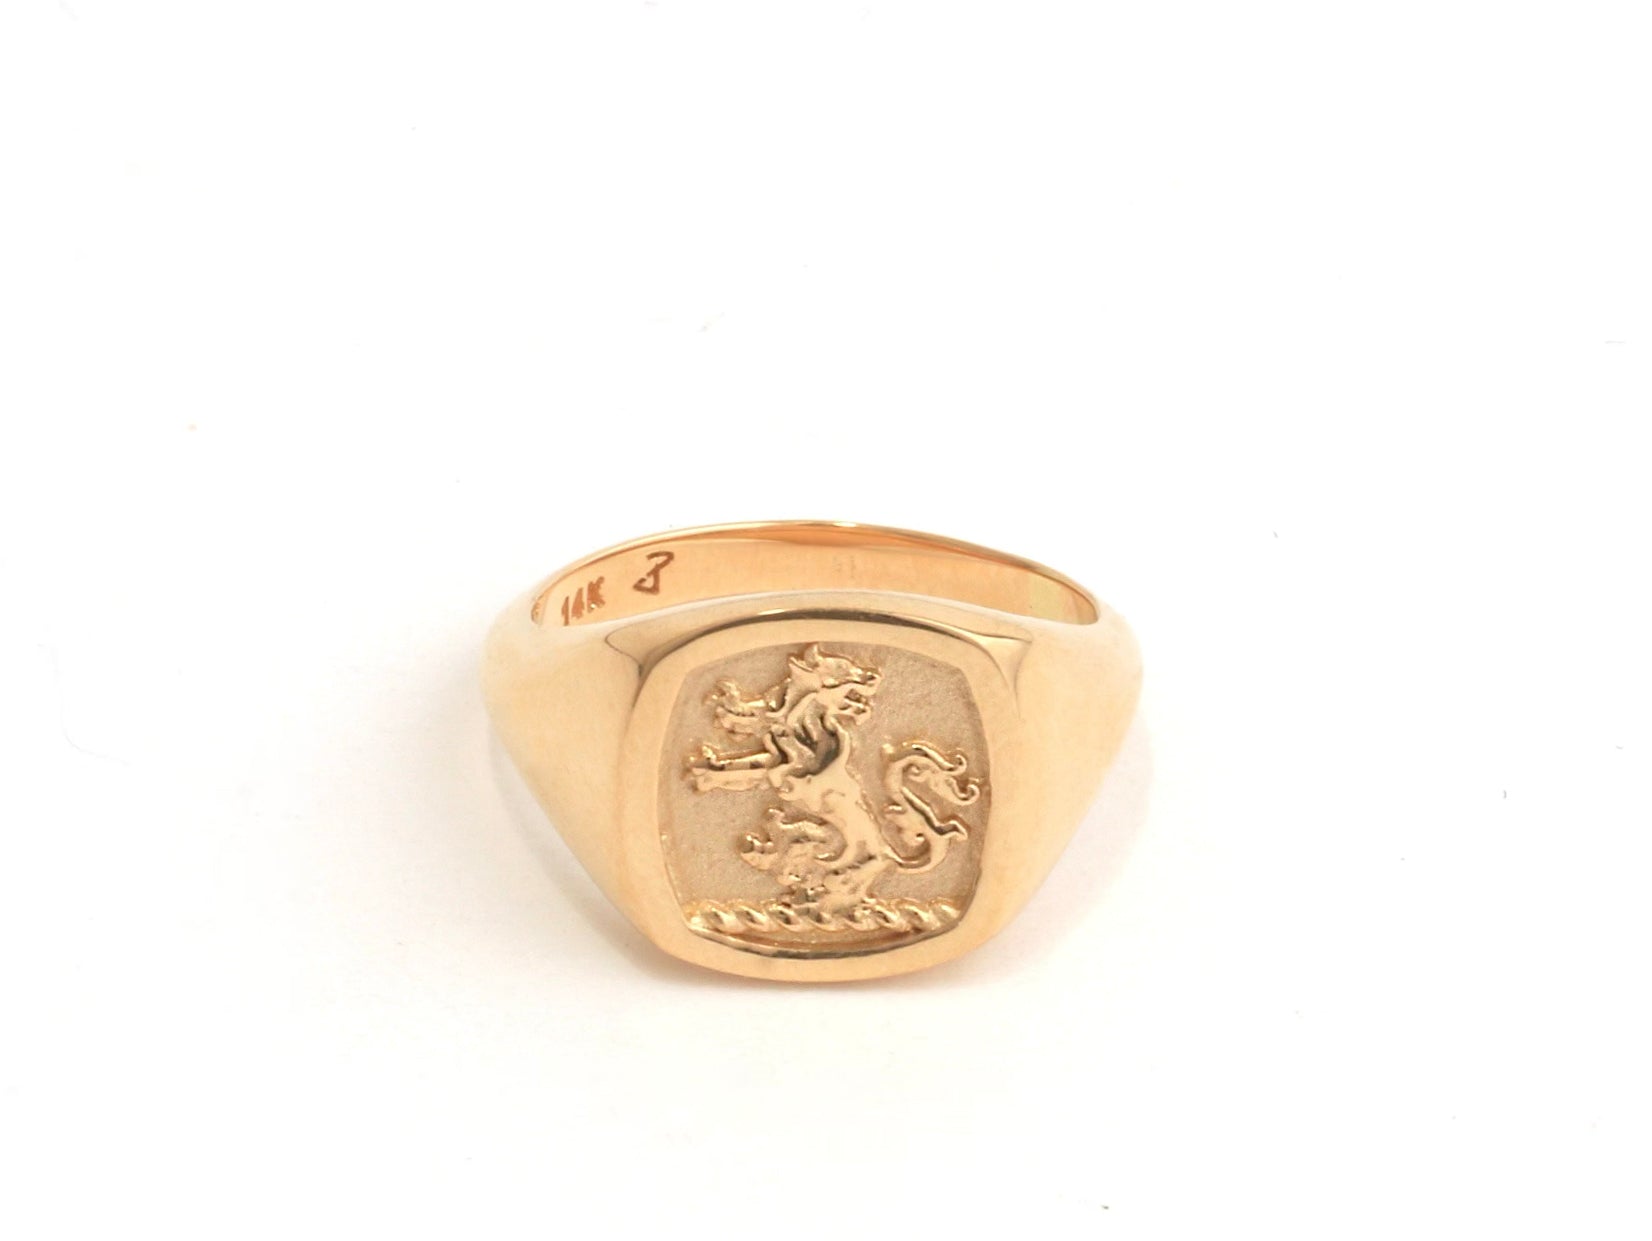 Rhea Lion crest family ring